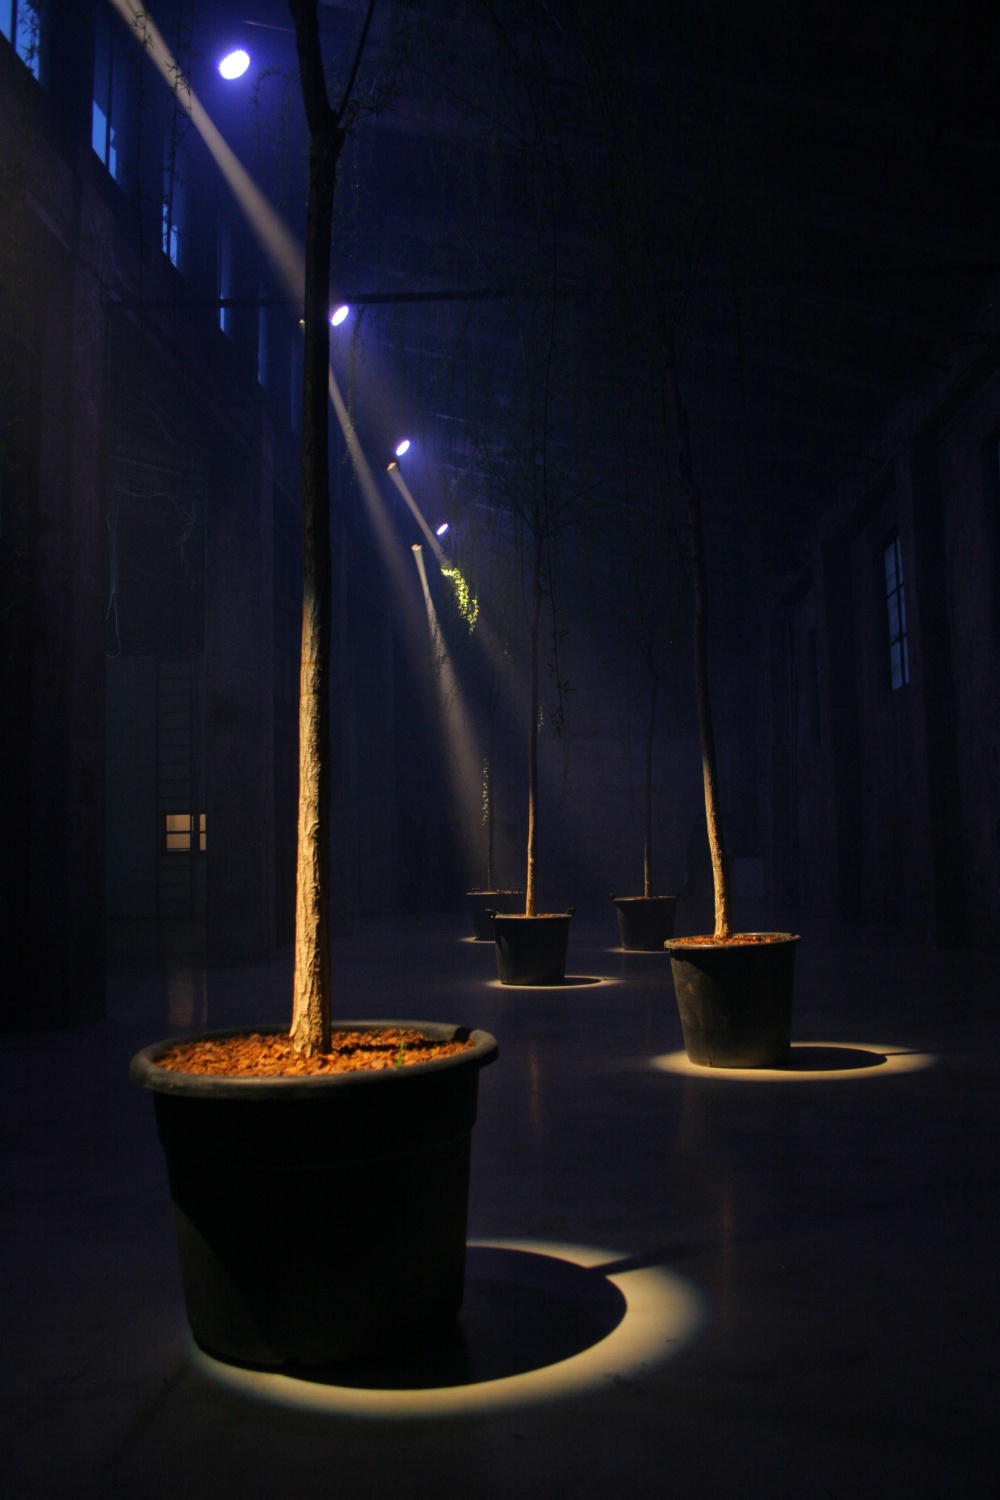  with light regards,
an installation by AJ Weissbard
Segheria, Milano, 2006
© photo by AJ Weissbard, 2006 